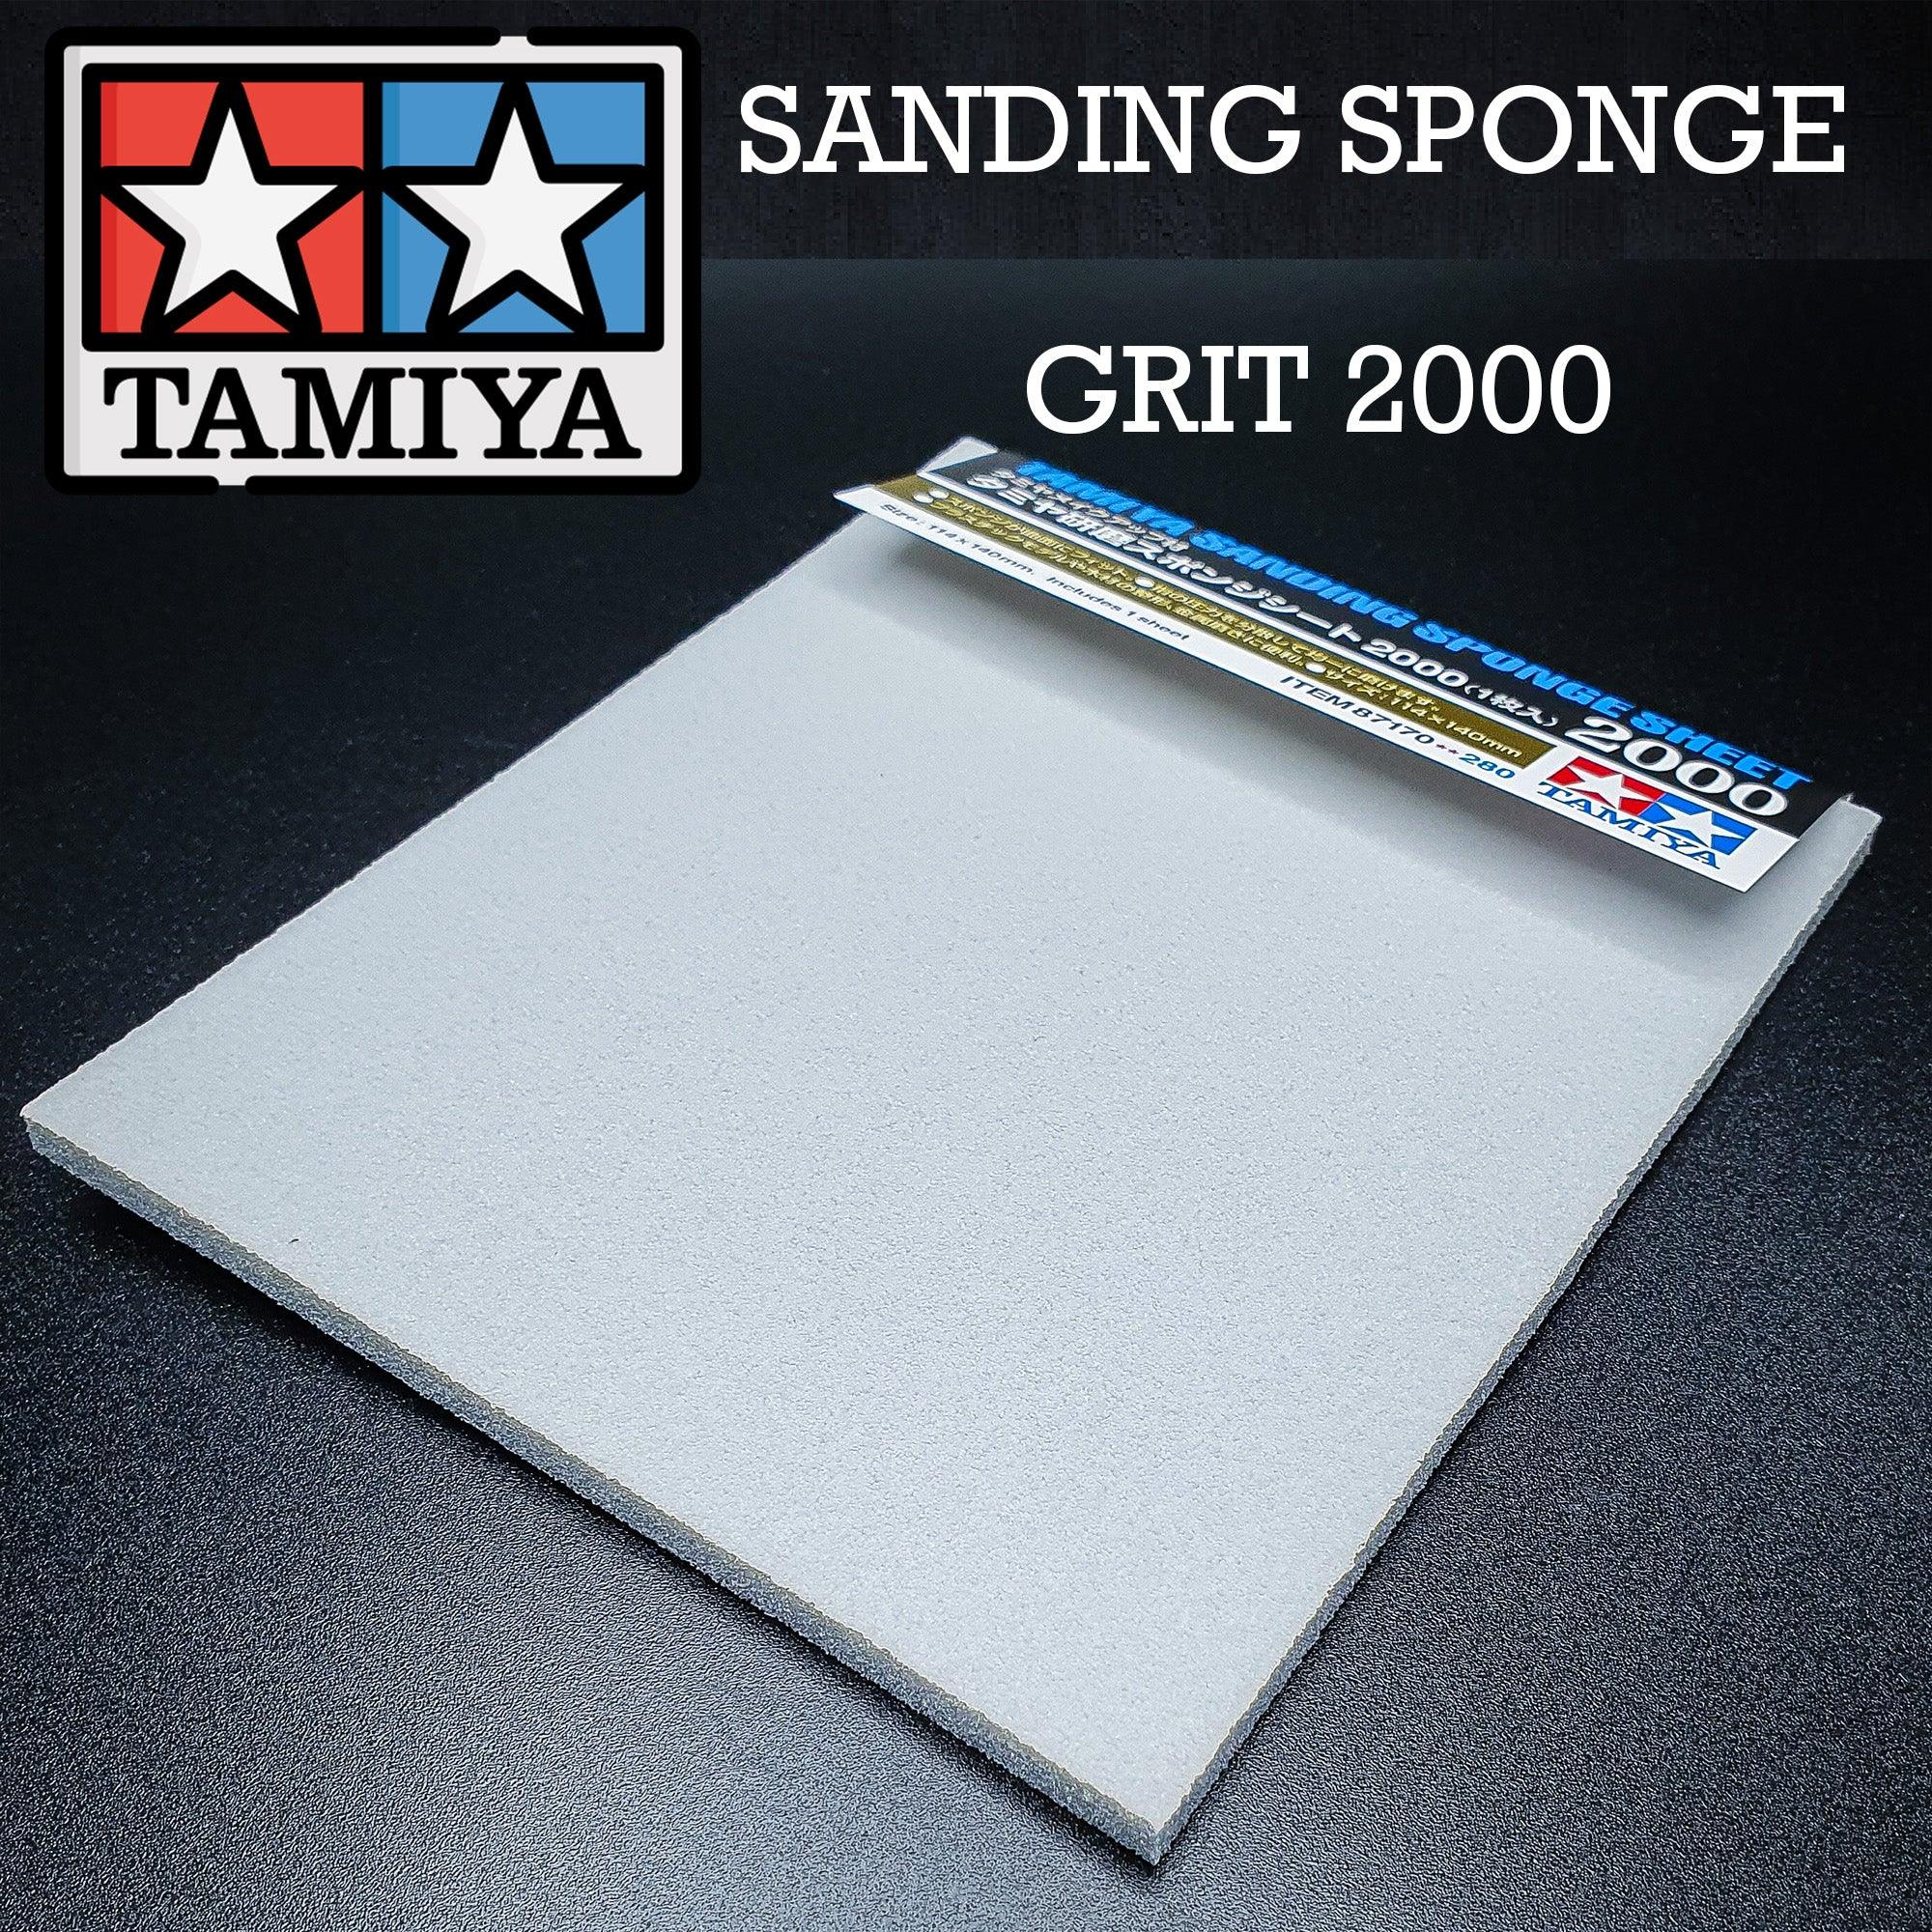 Tamiya sanding sponge 600 / Tamiya USA